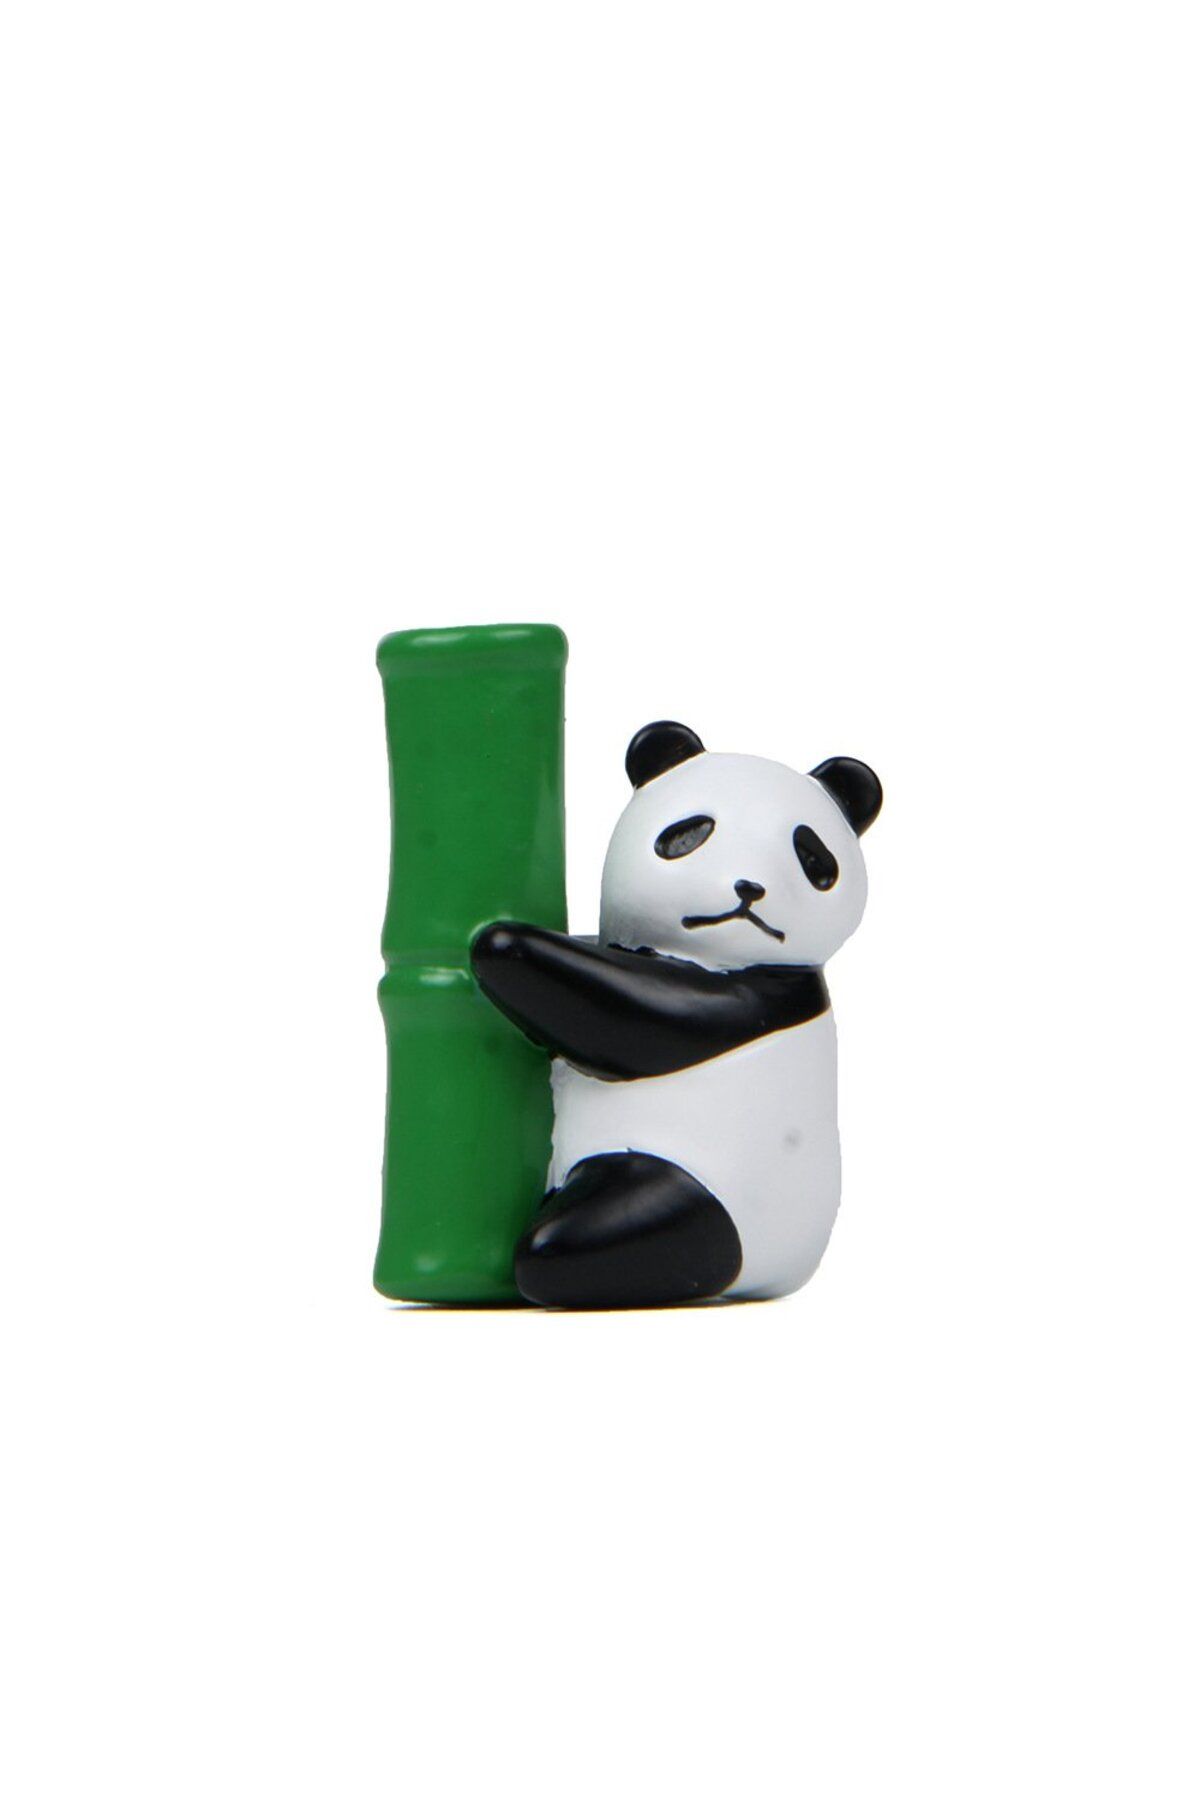 Miniminti Bambulu Panda Figürü